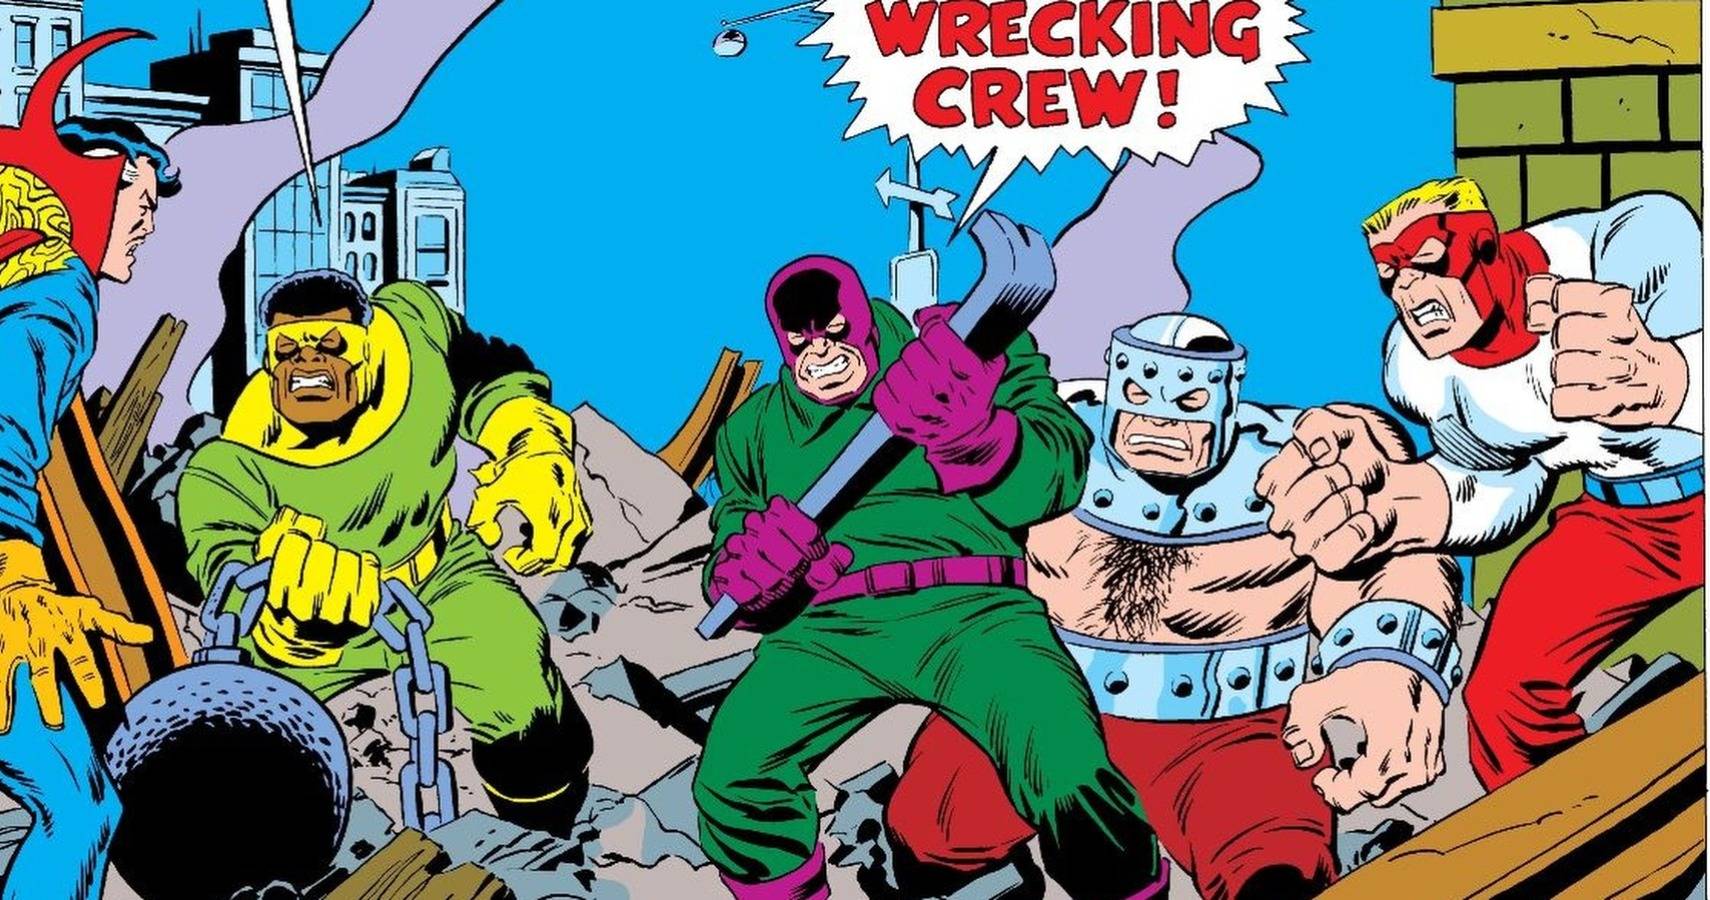 The wrecking crew comics